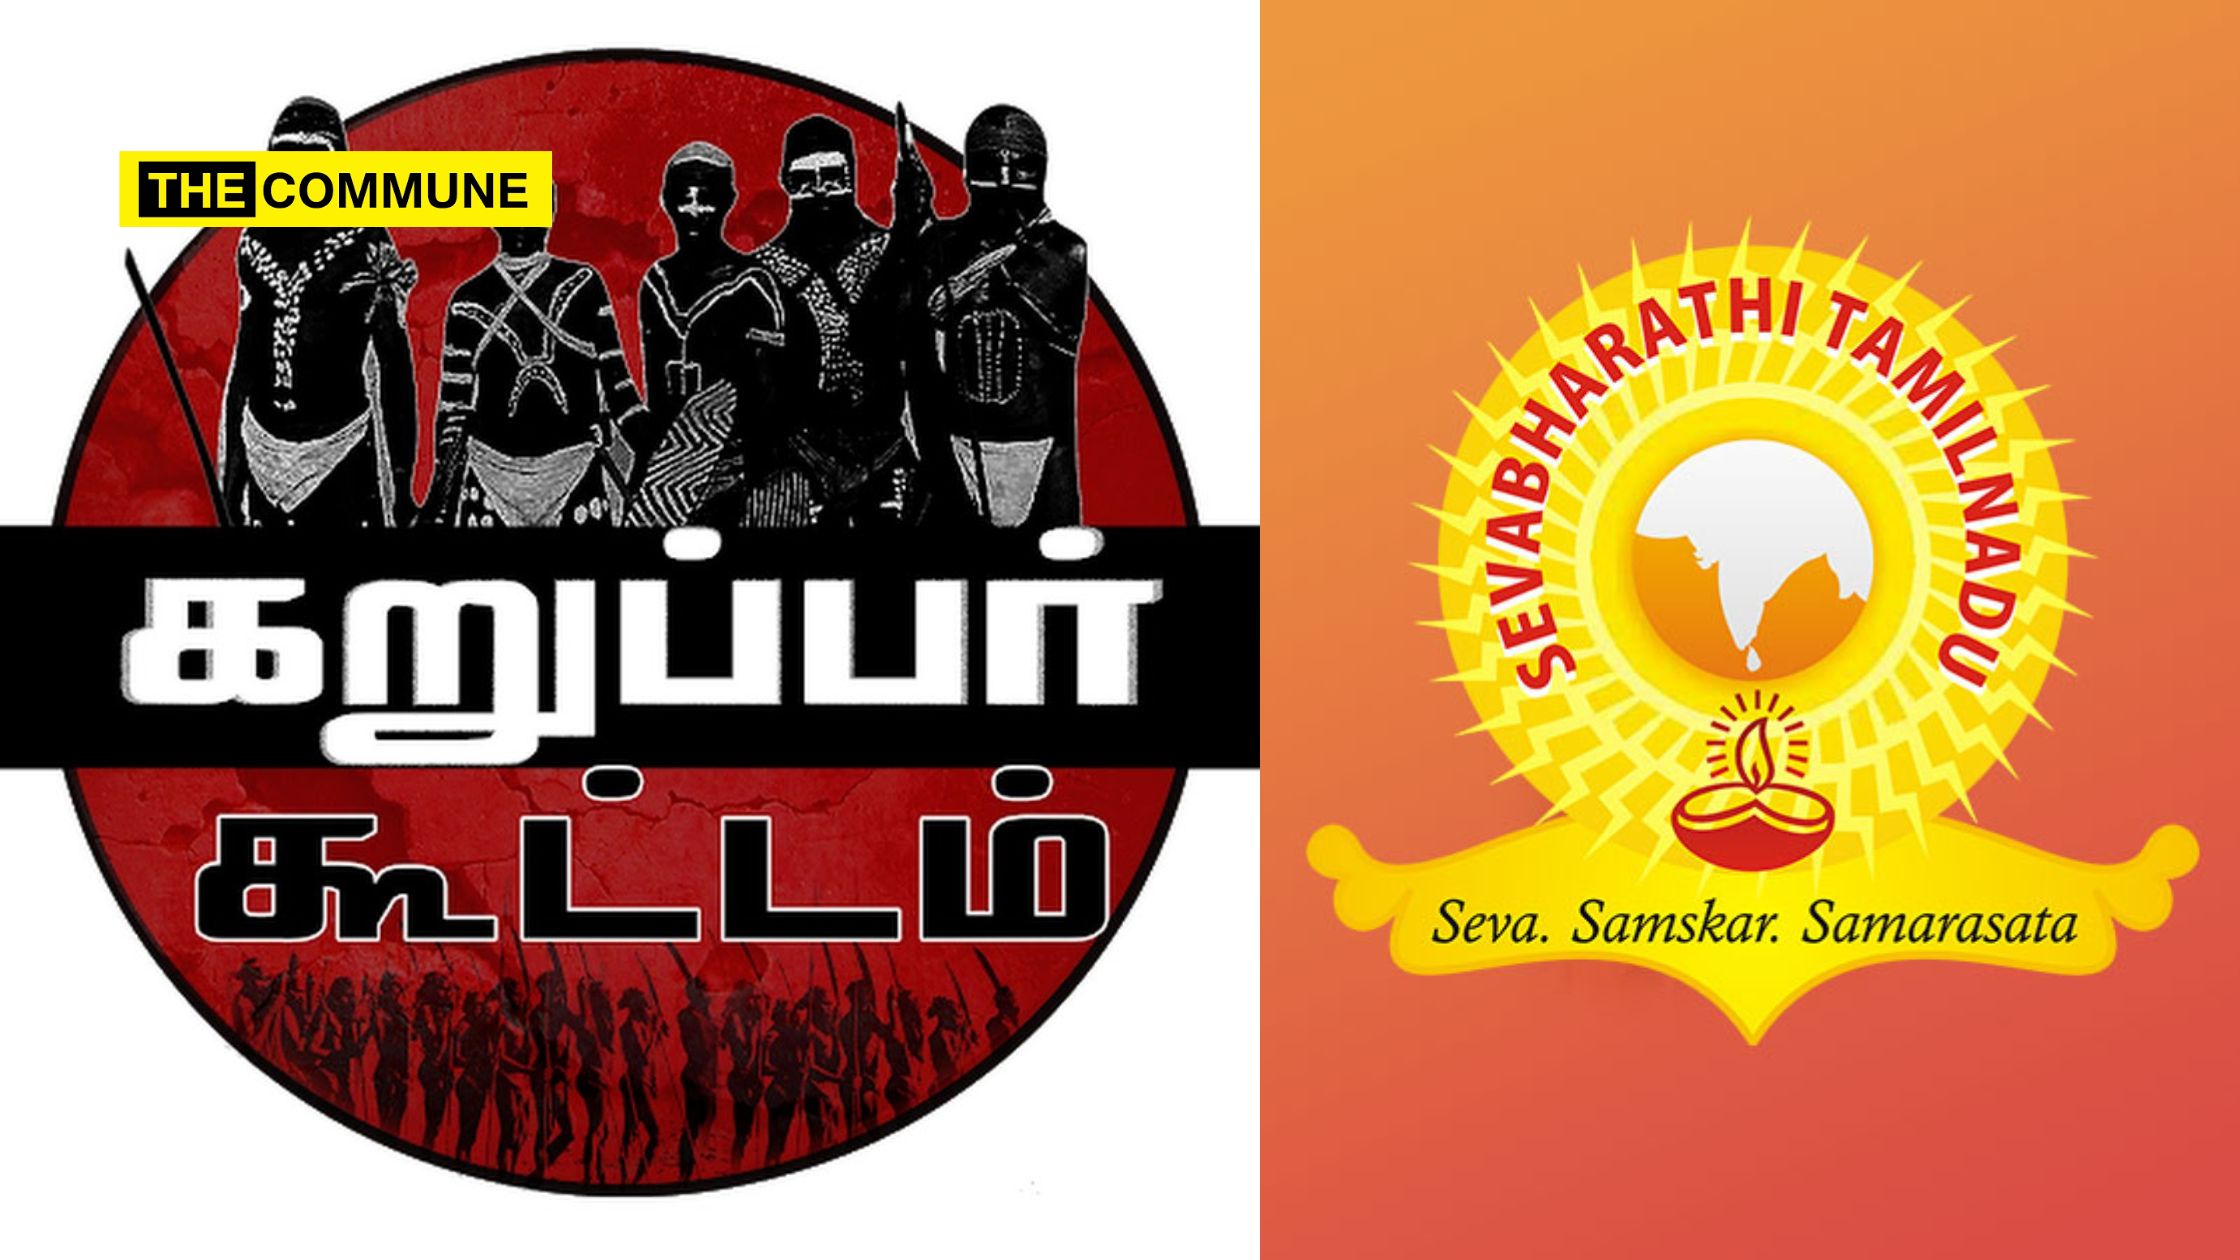 About Us – Sevabharathi Tamilnadu